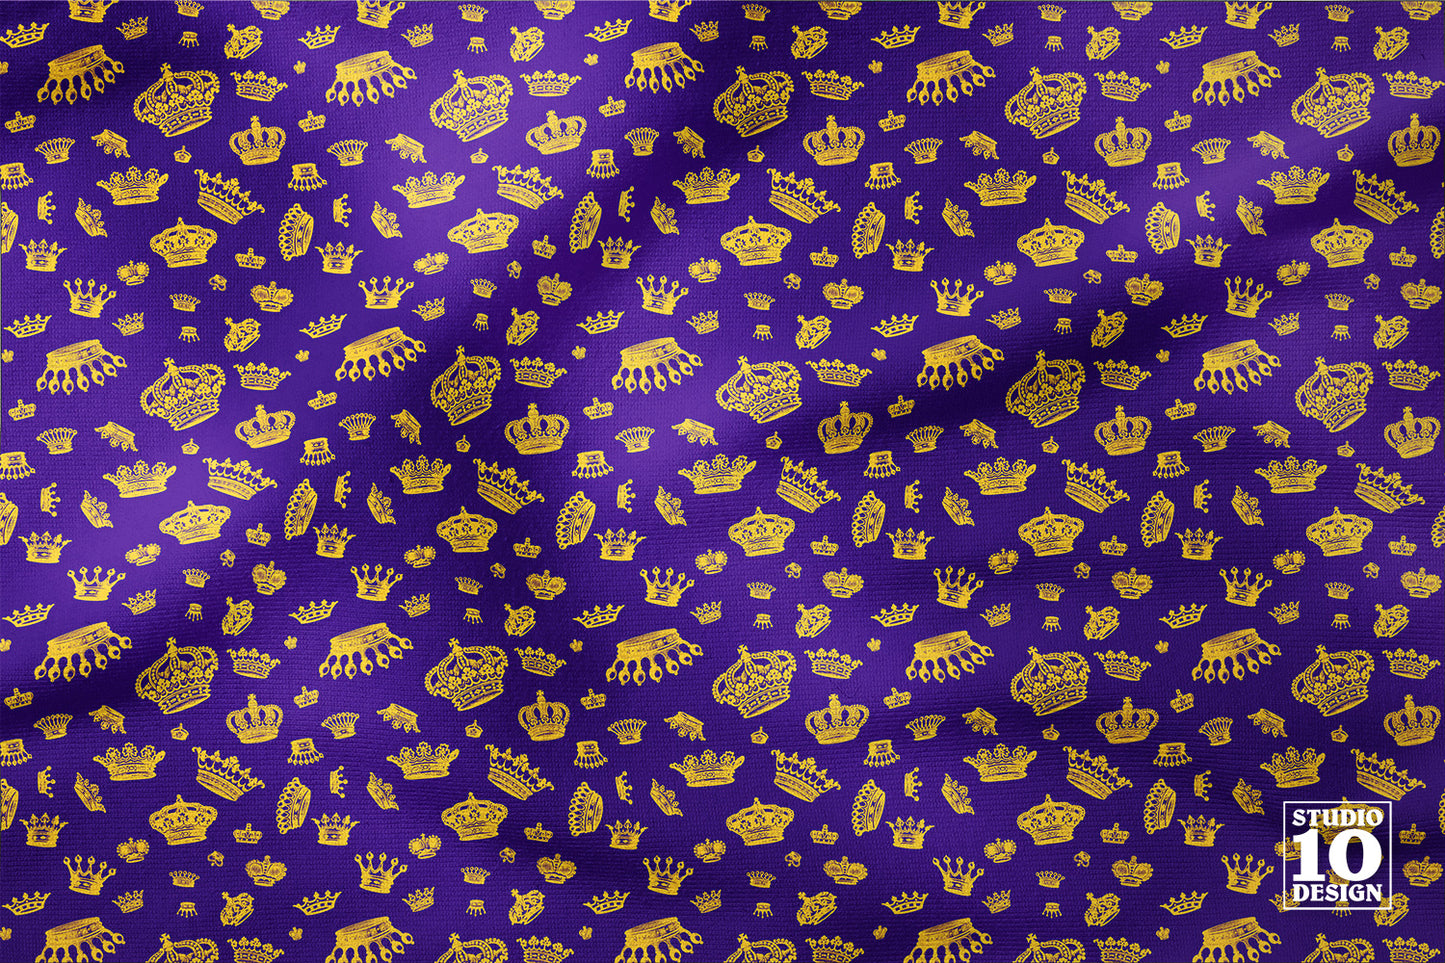 Royal Crowns Golden Yellow+Royal Purple Printed Fabric by Studio Ten Design